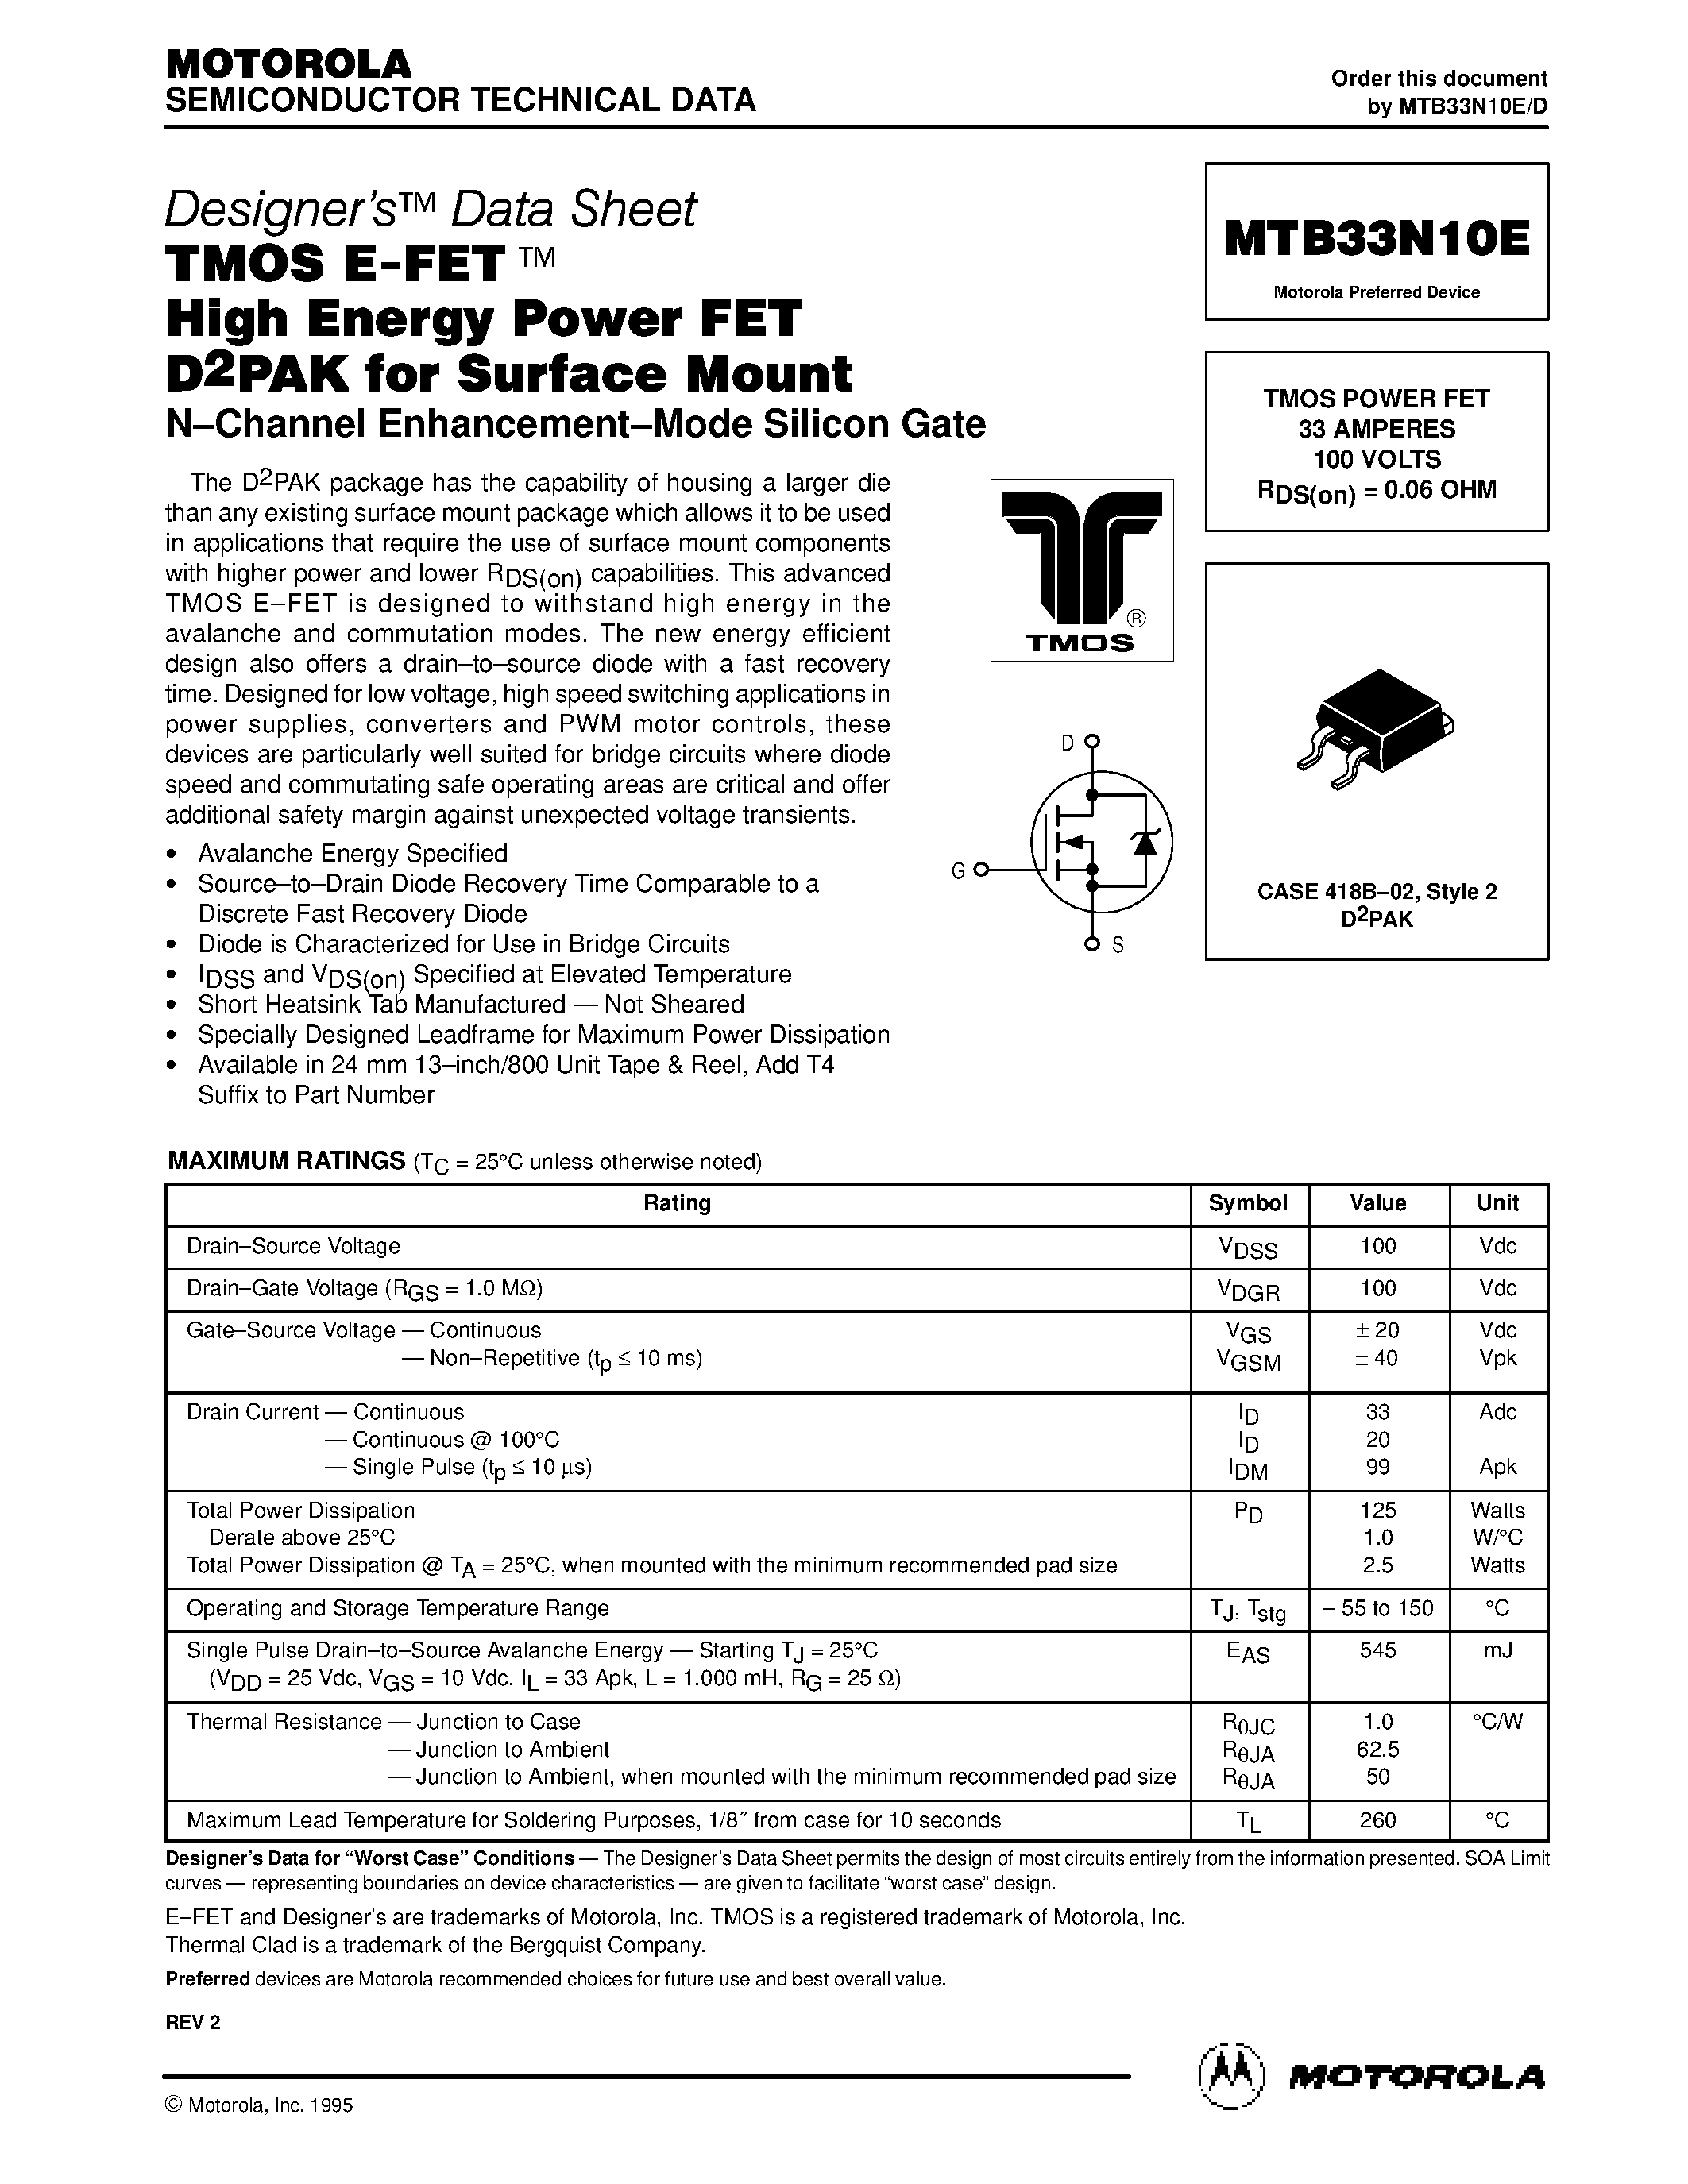 Даташит MTB33N10E - TMOS POWER FET 33 AMPERES 100 VOLTS страница 1